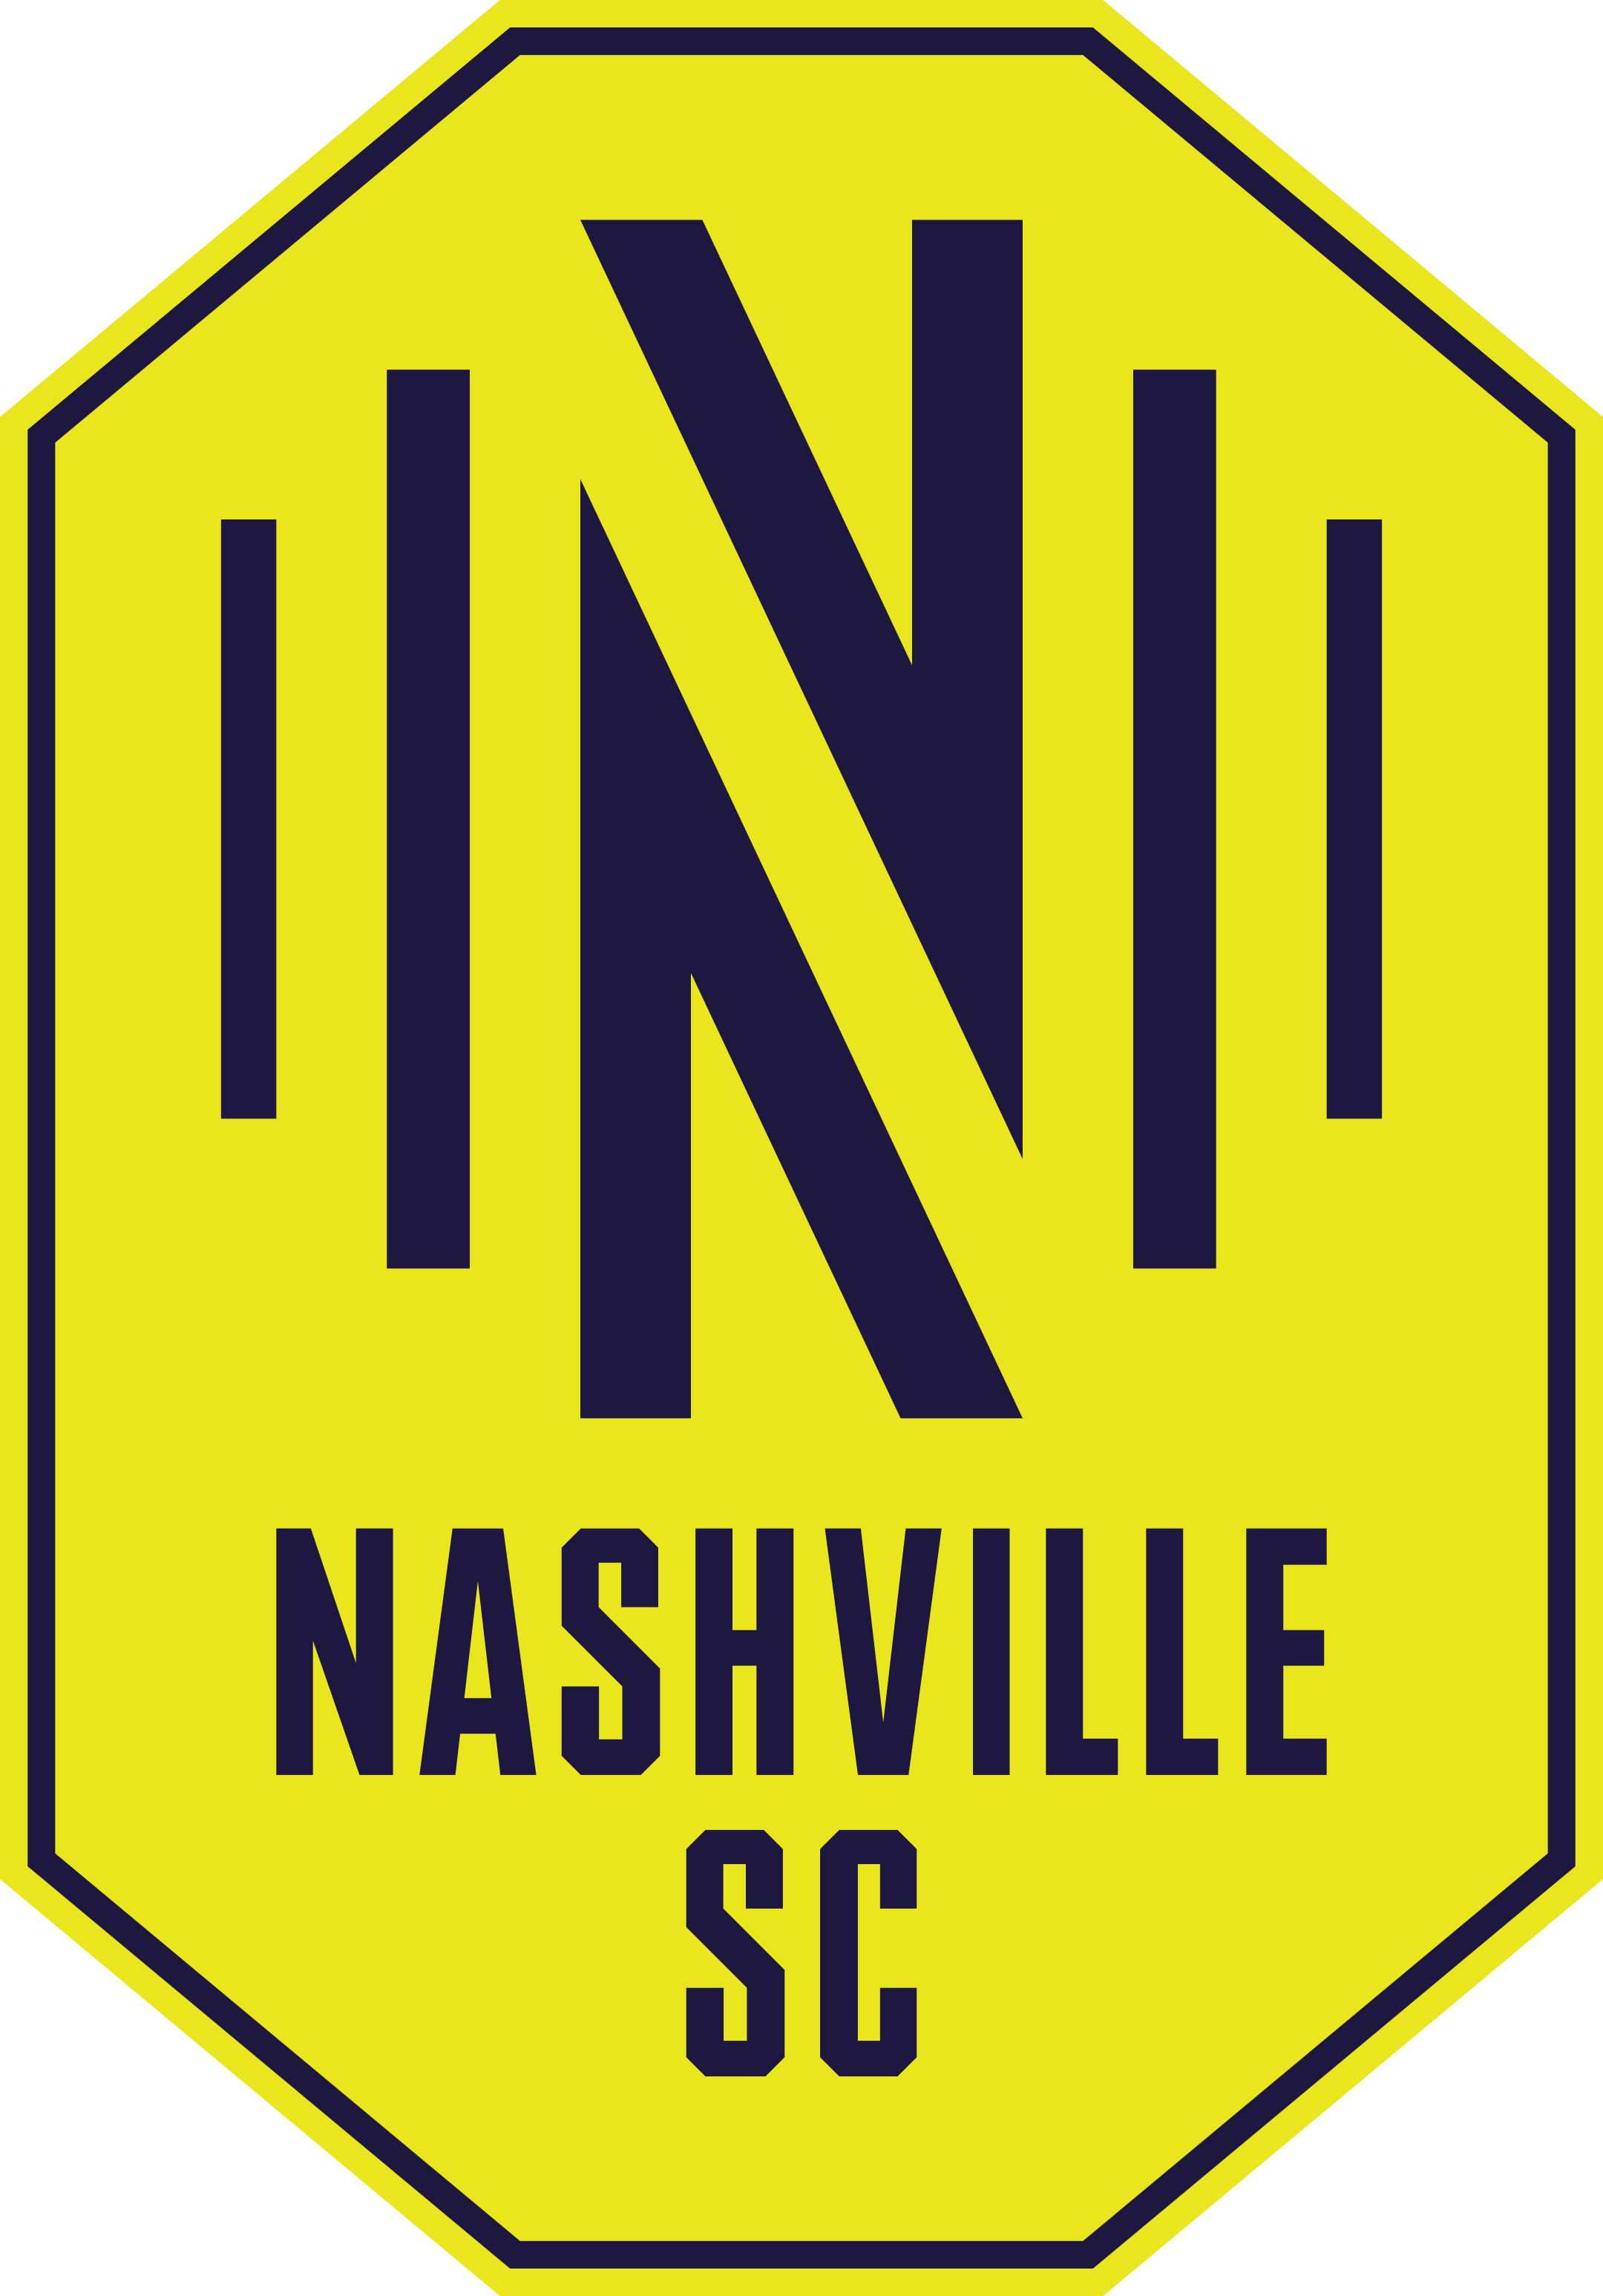 Nashville Soccer Club logo.